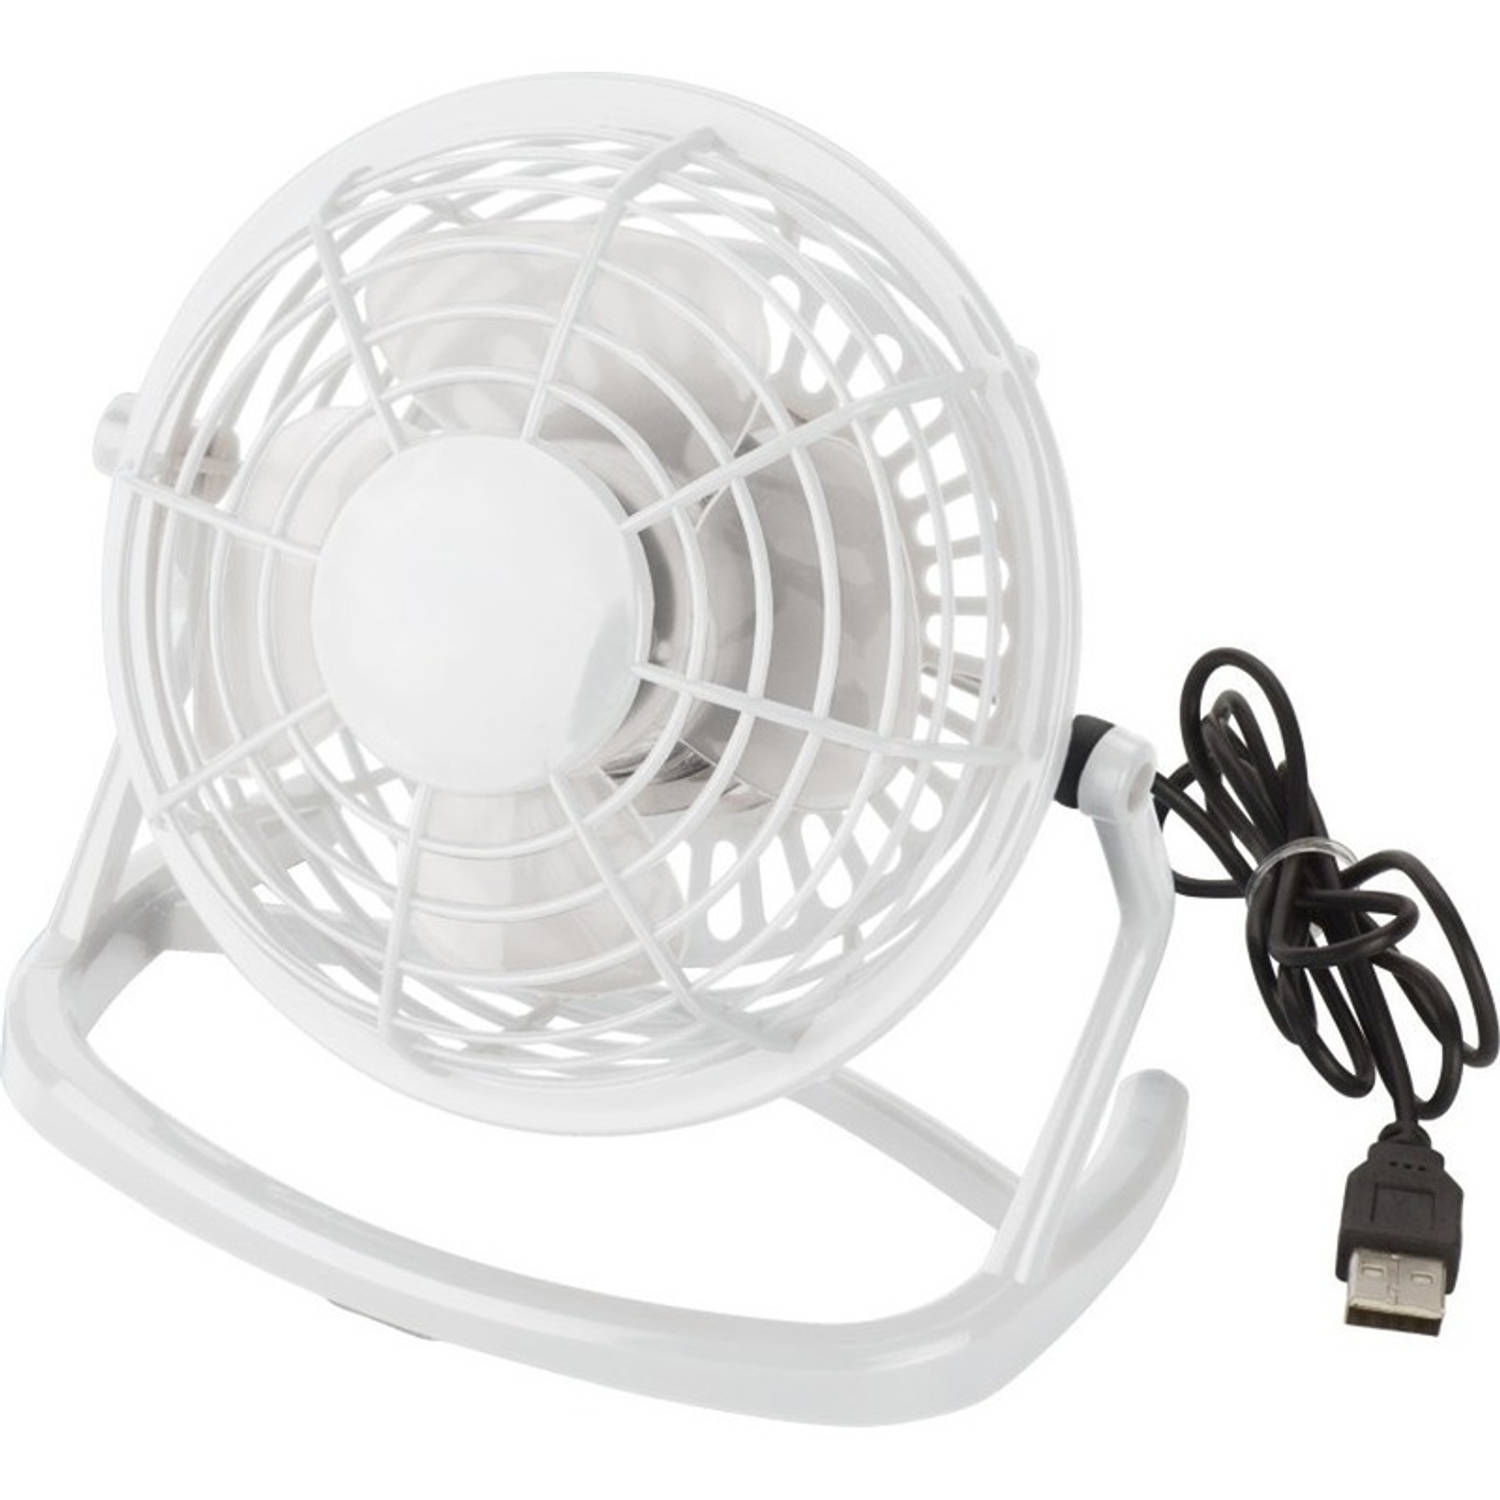 Mini ventilator wit USB aansluiting tafelventilator